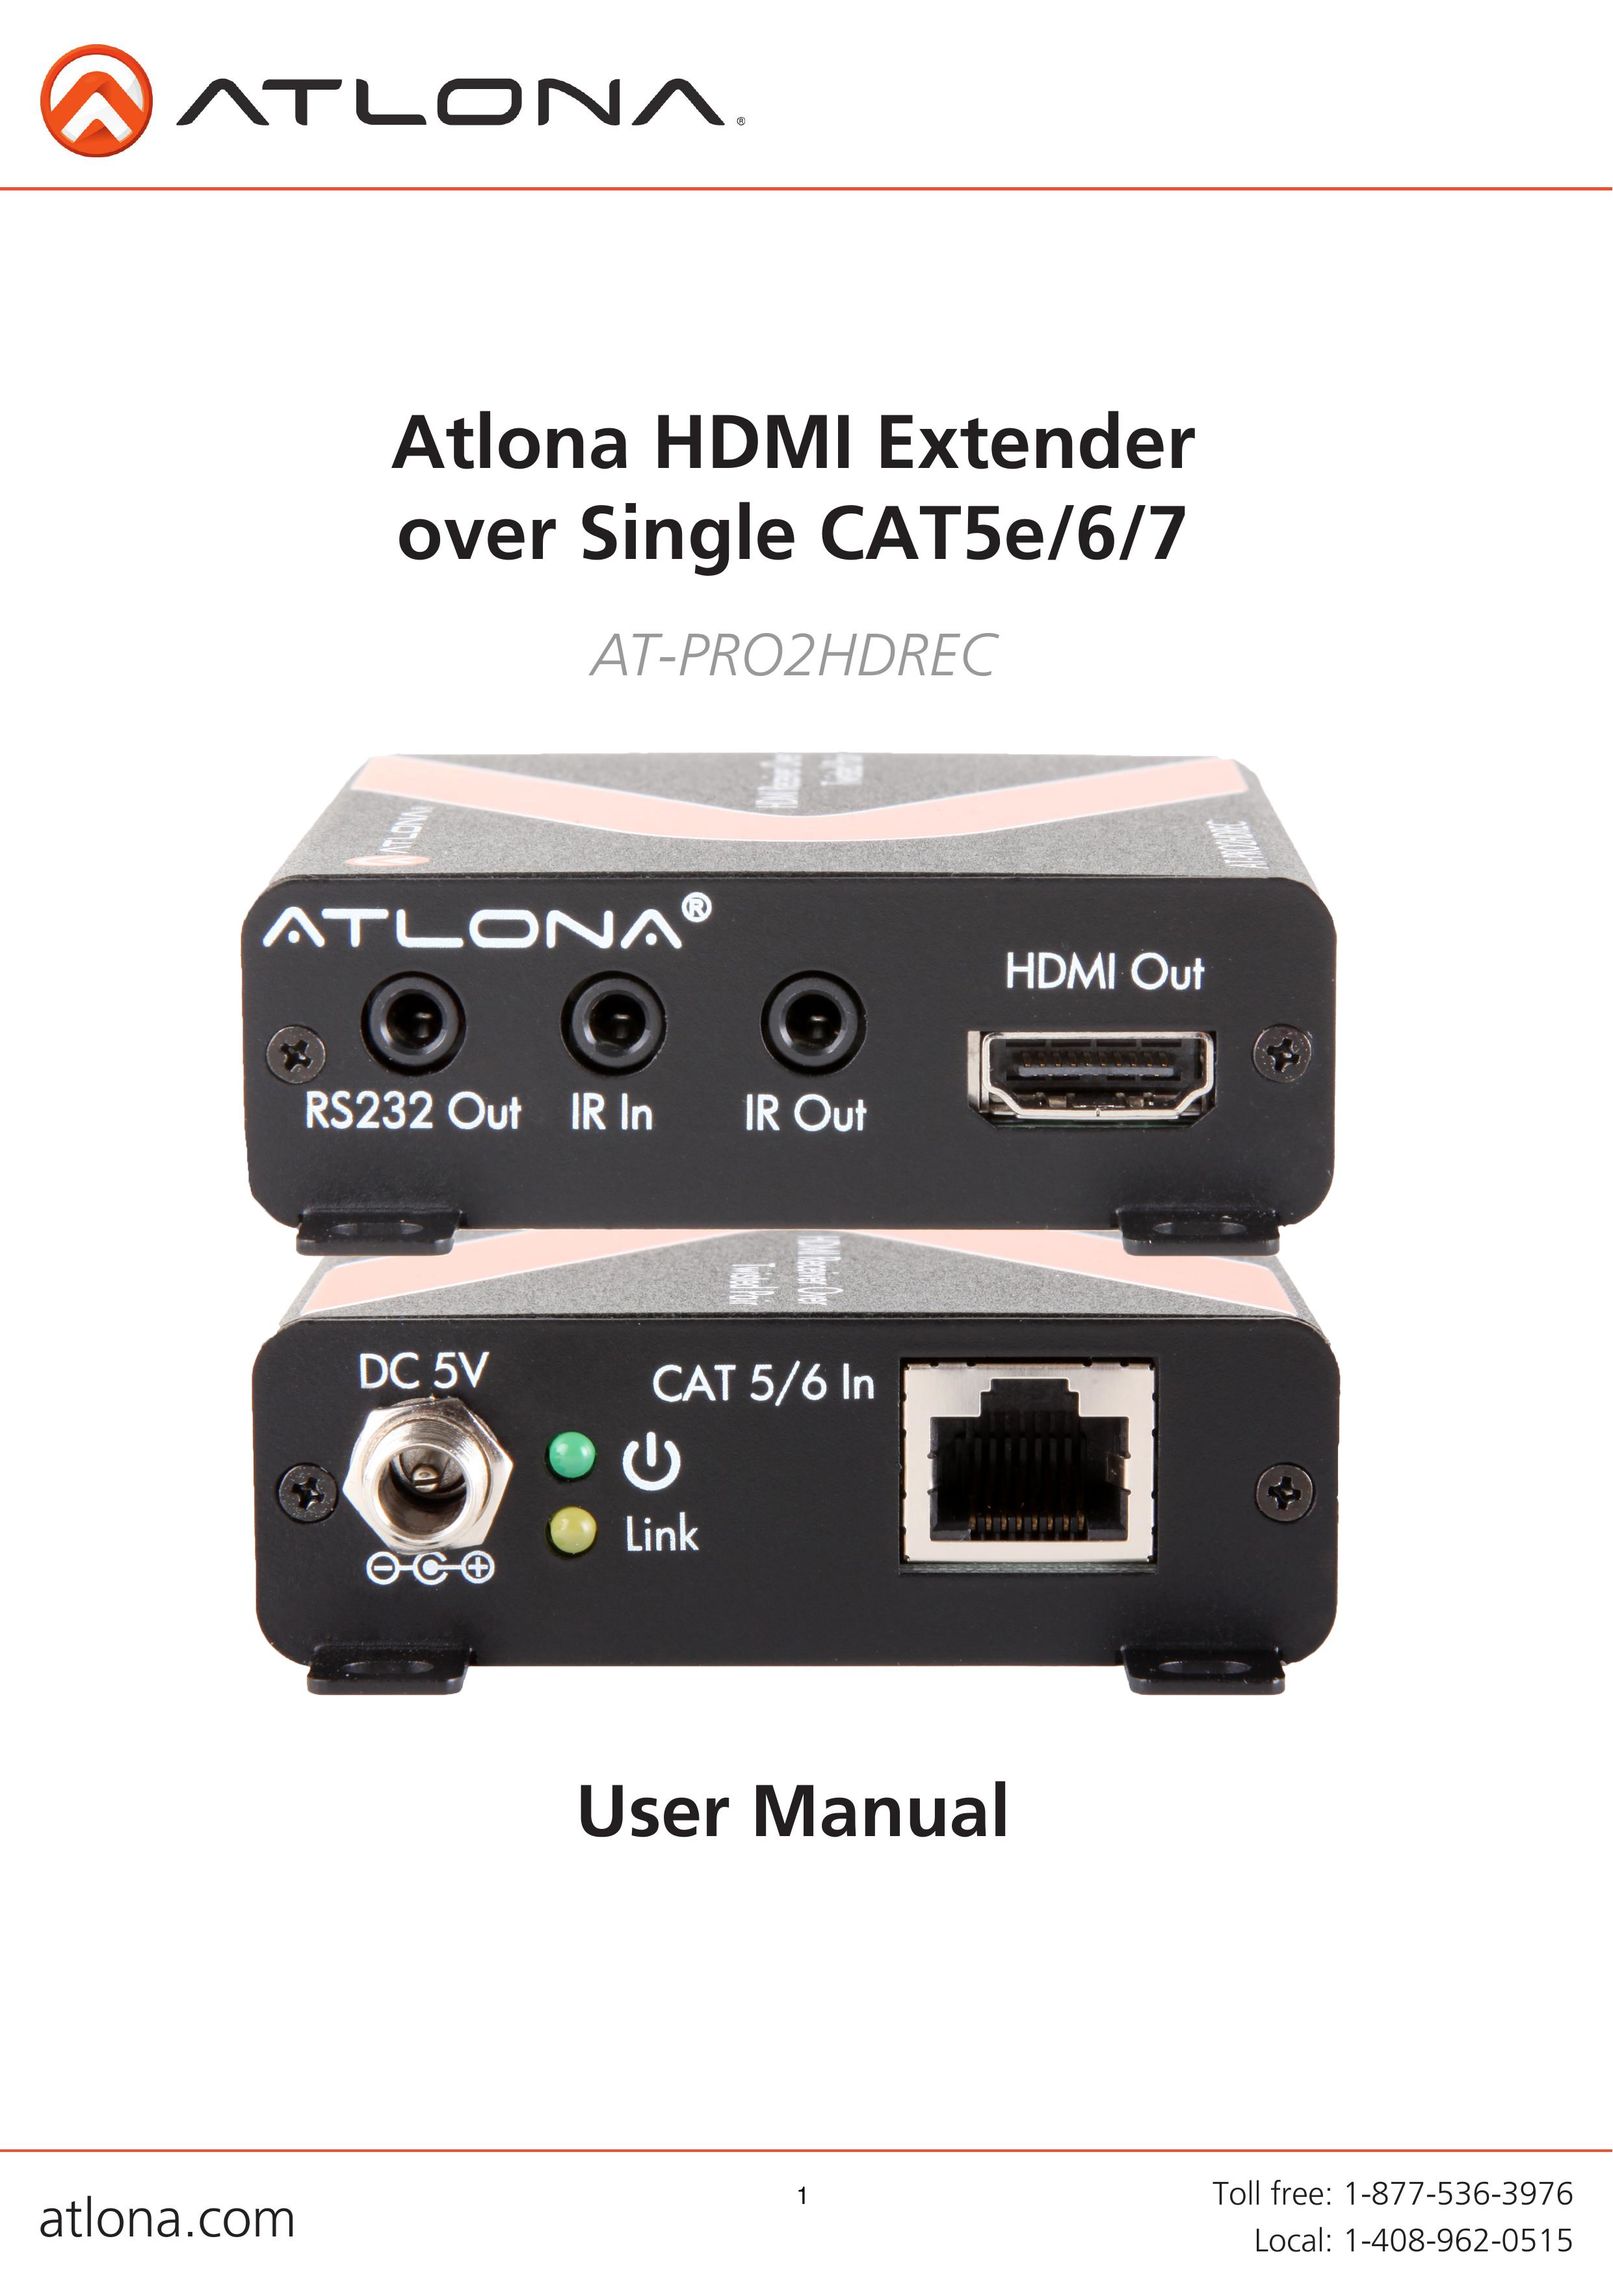 Atlona AT-PRO2HDREC TV Cables User Manual